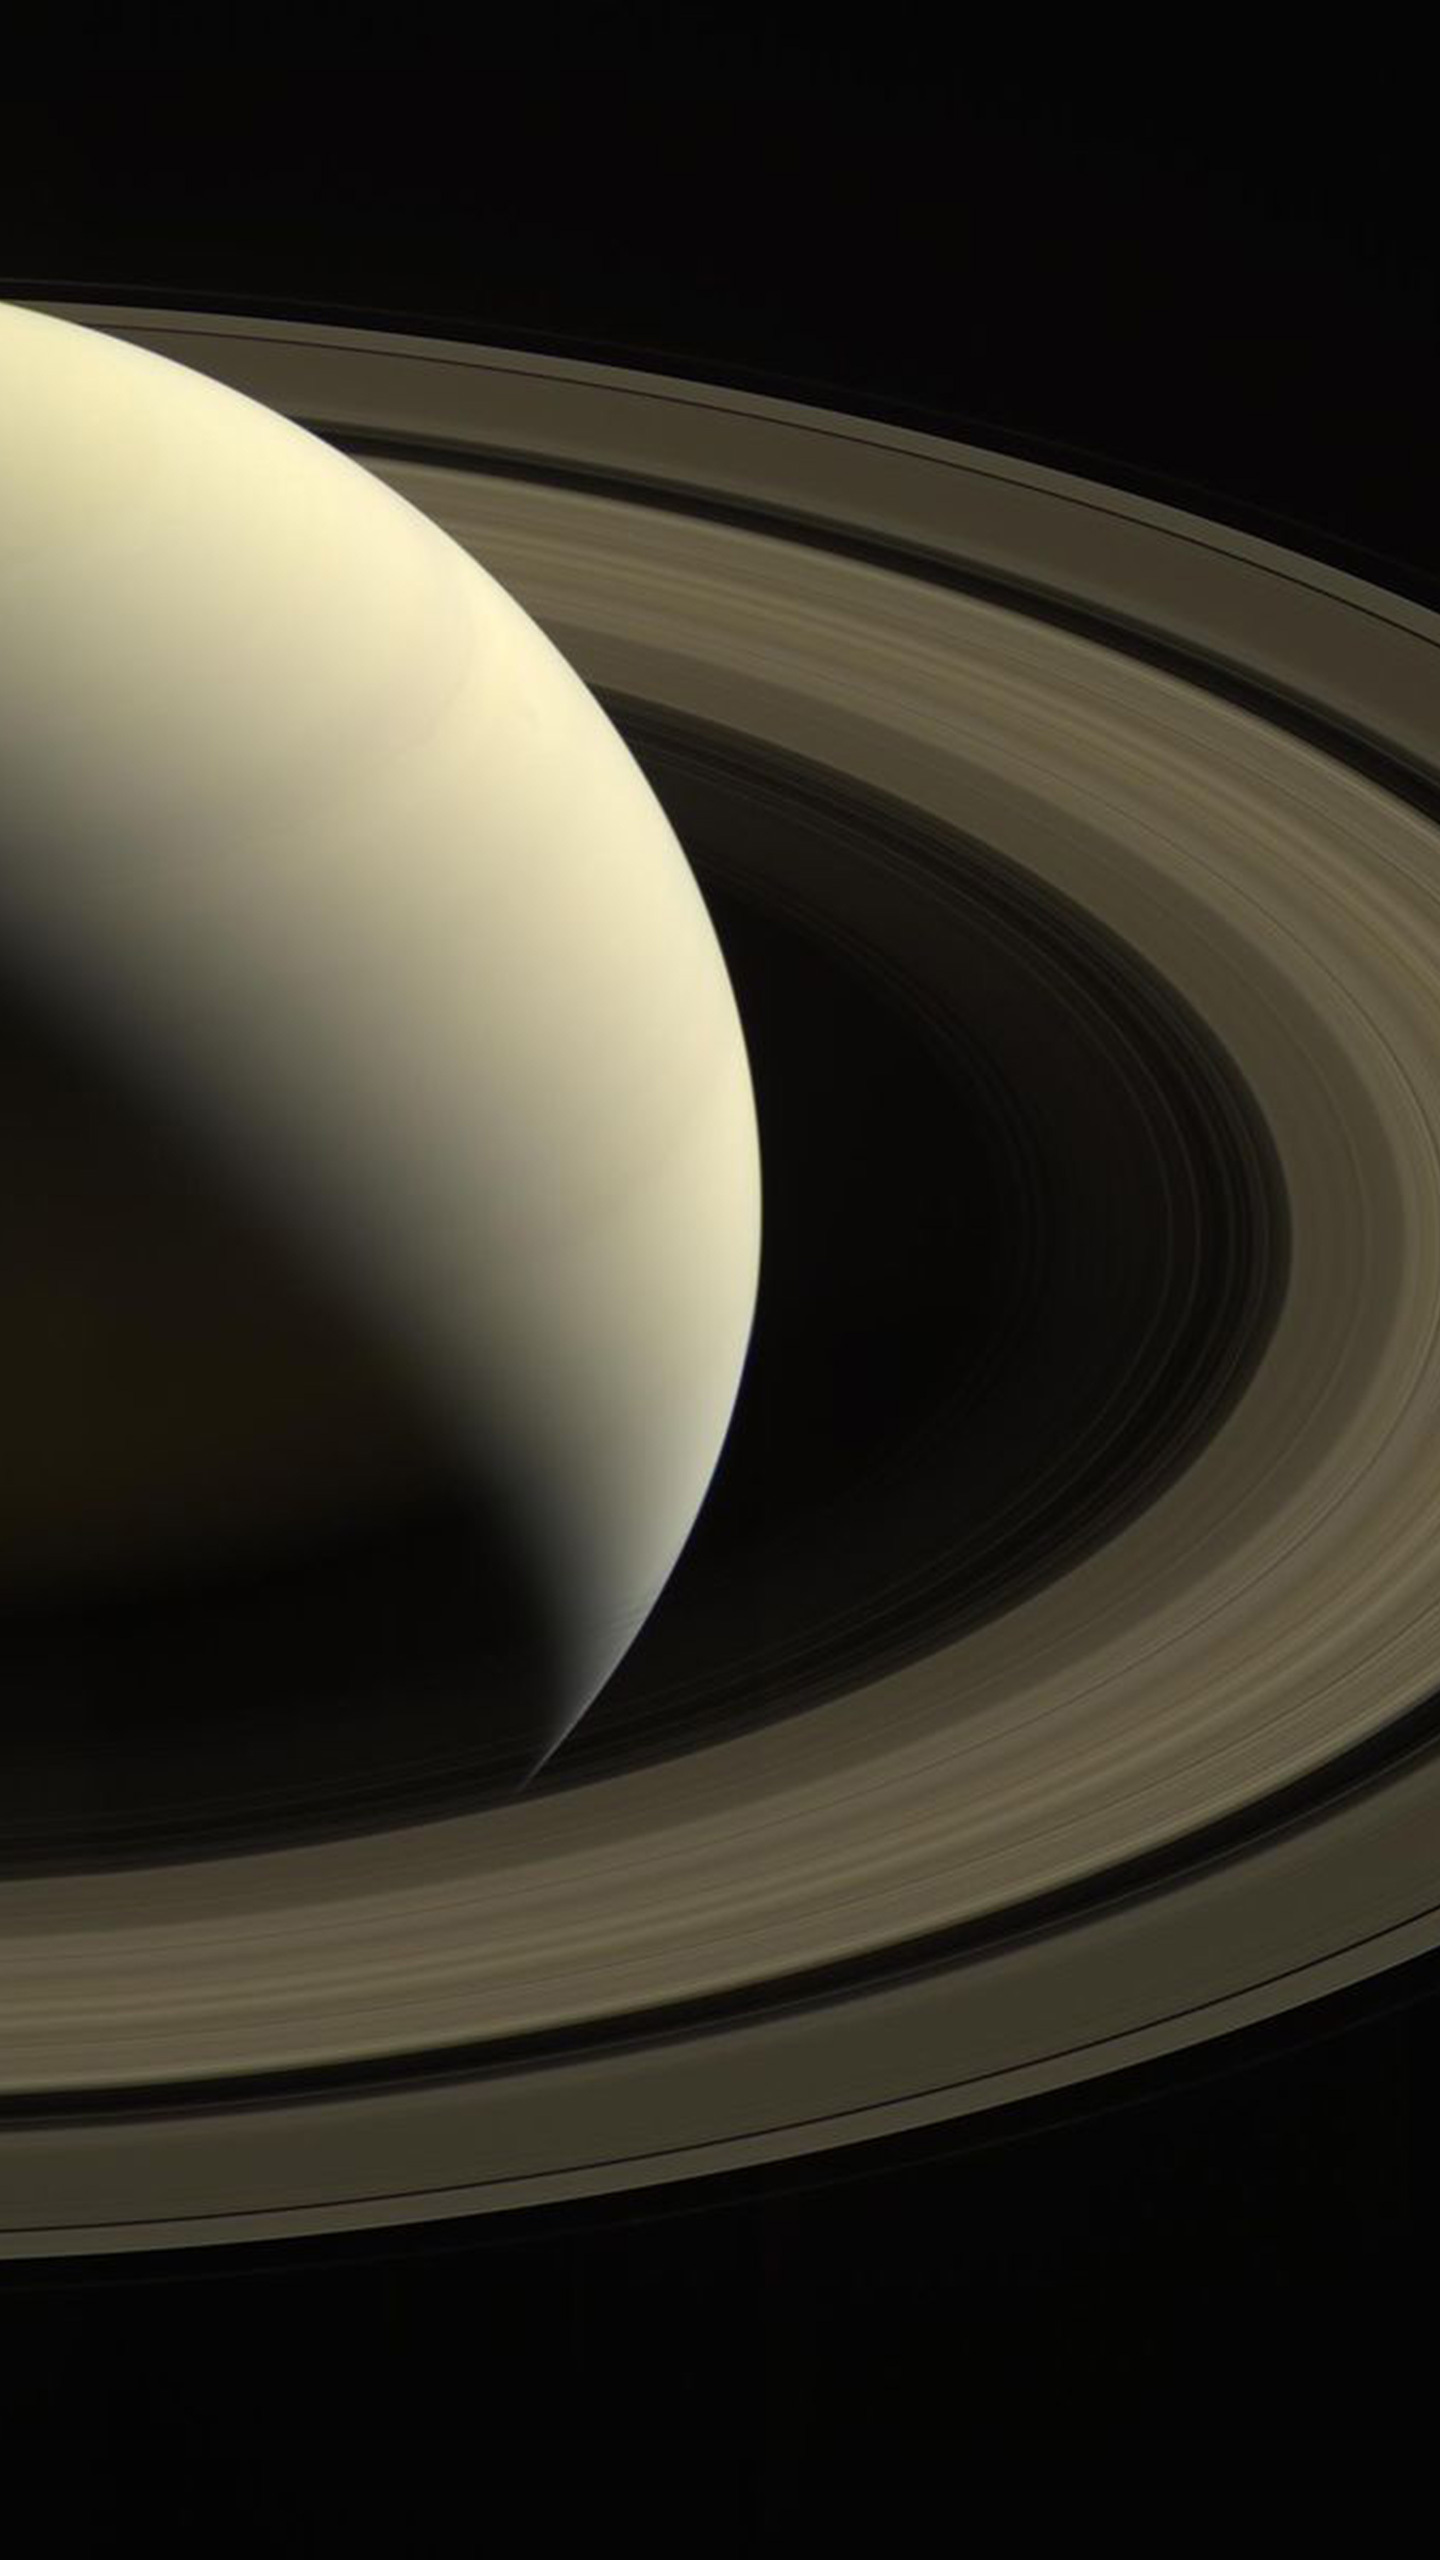 10 Things: October 16 – NASA Solar System Exploration